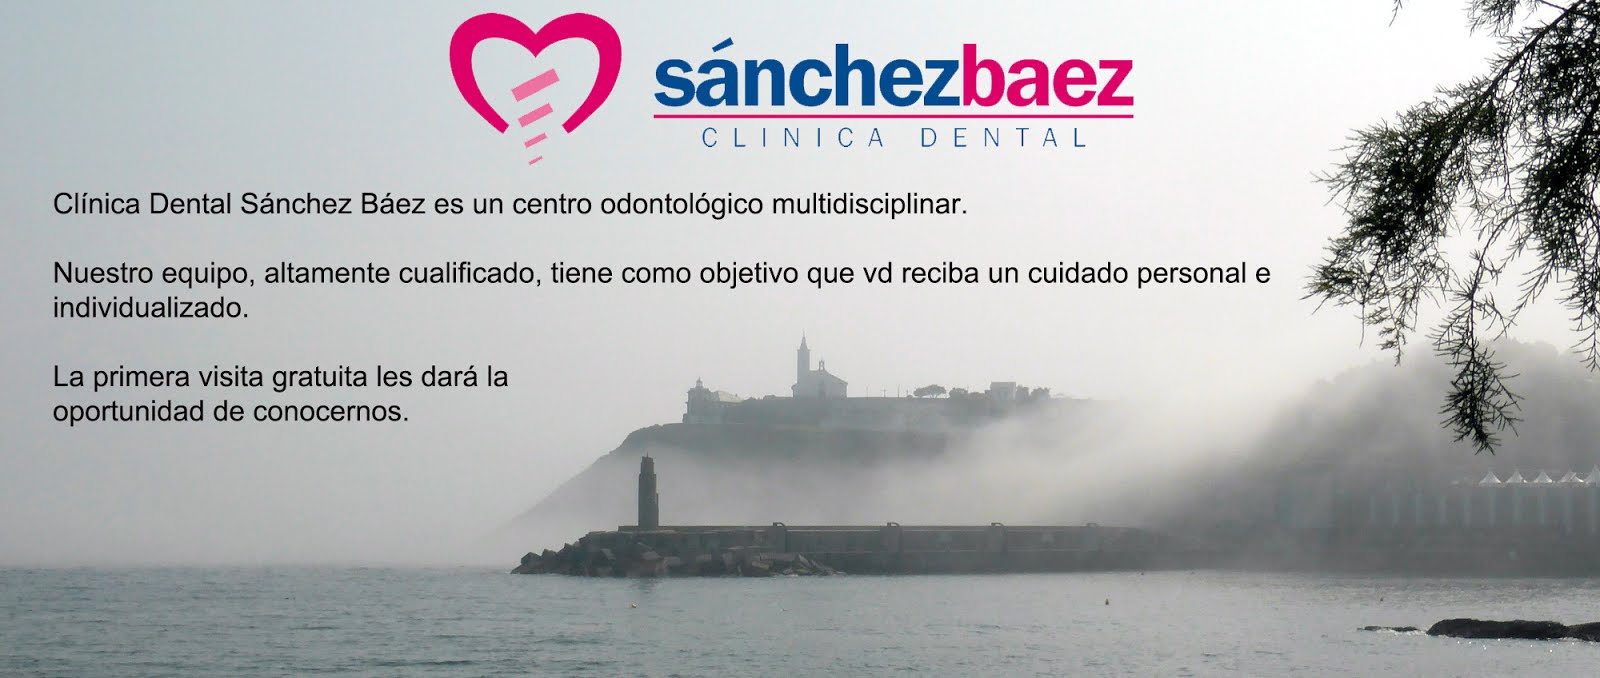 Sánchezbaez Clínica Dental